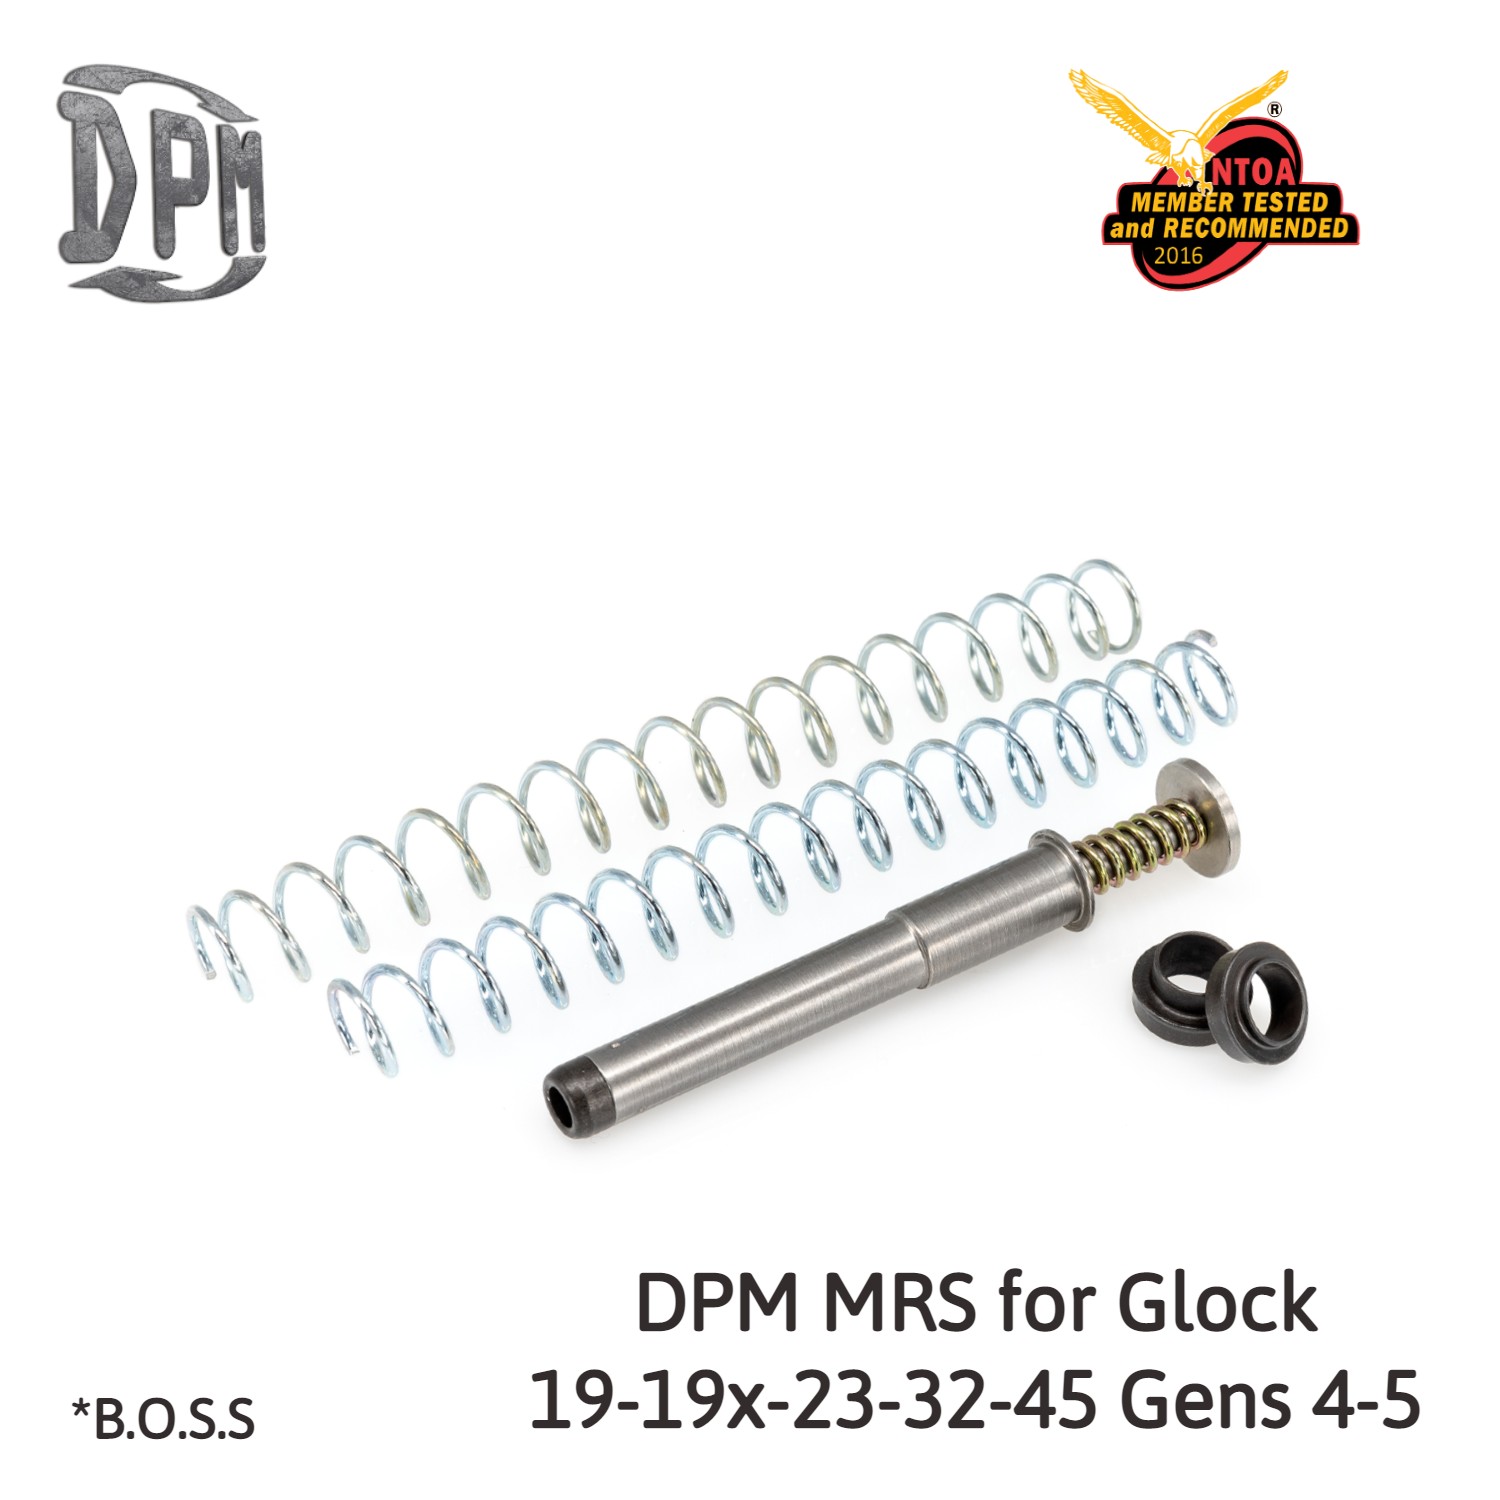 DPM MRS for Glock 19 aresmaxima.com